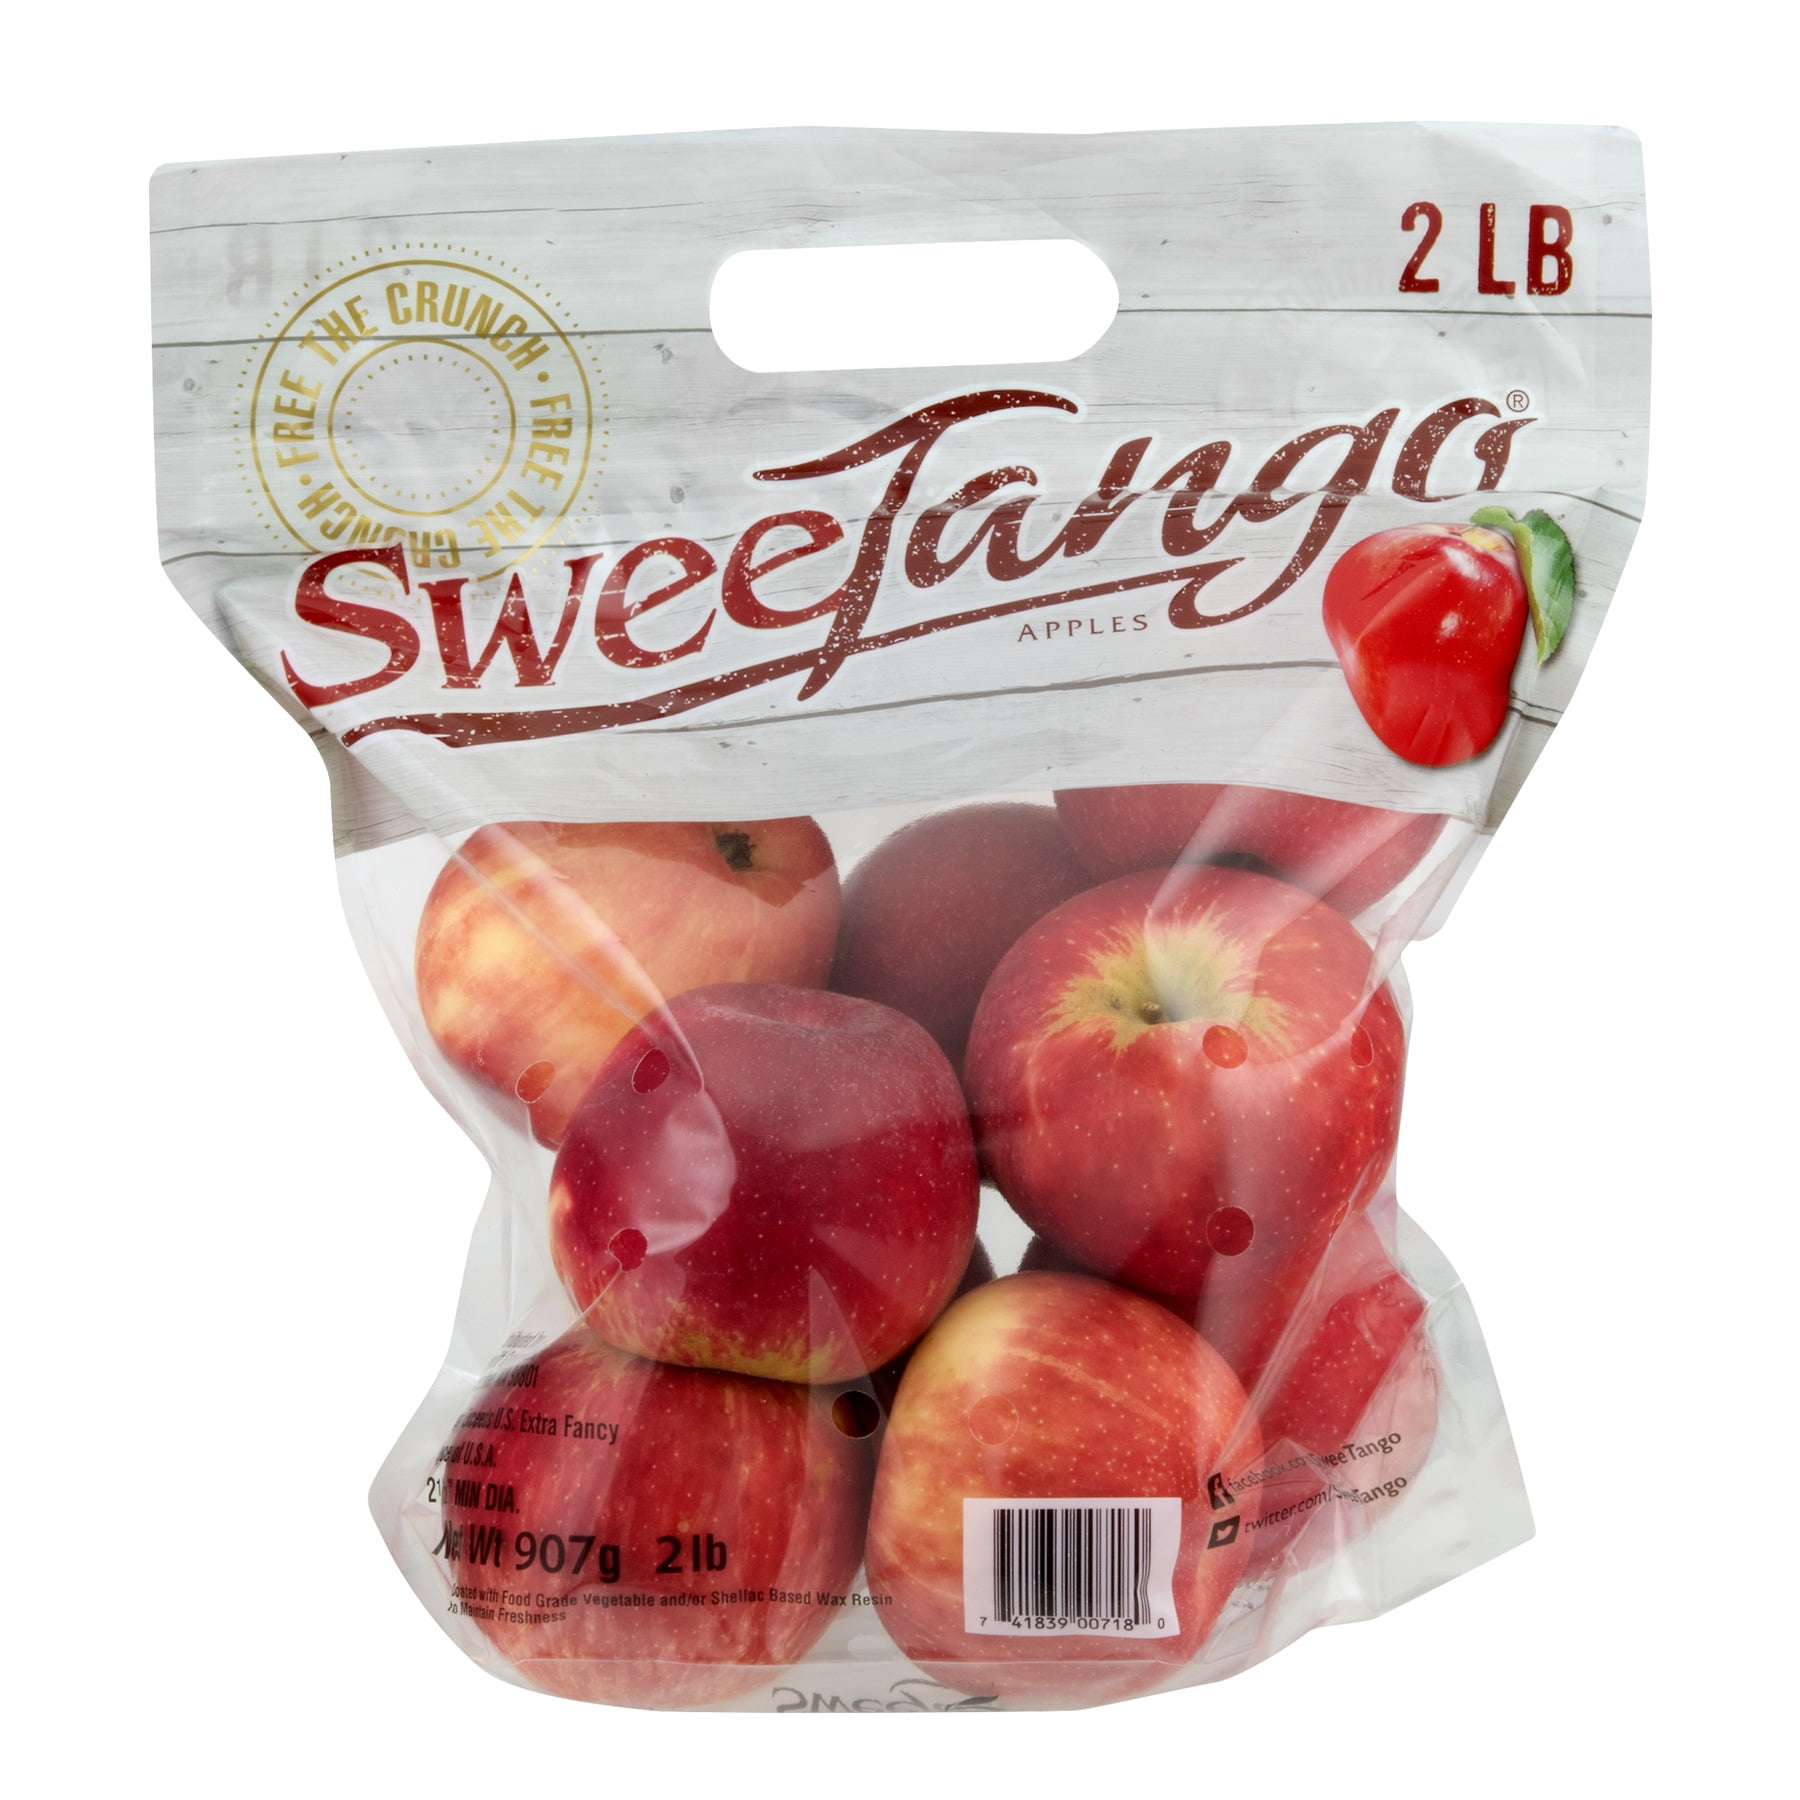 SweeTango Apples, 2 lb